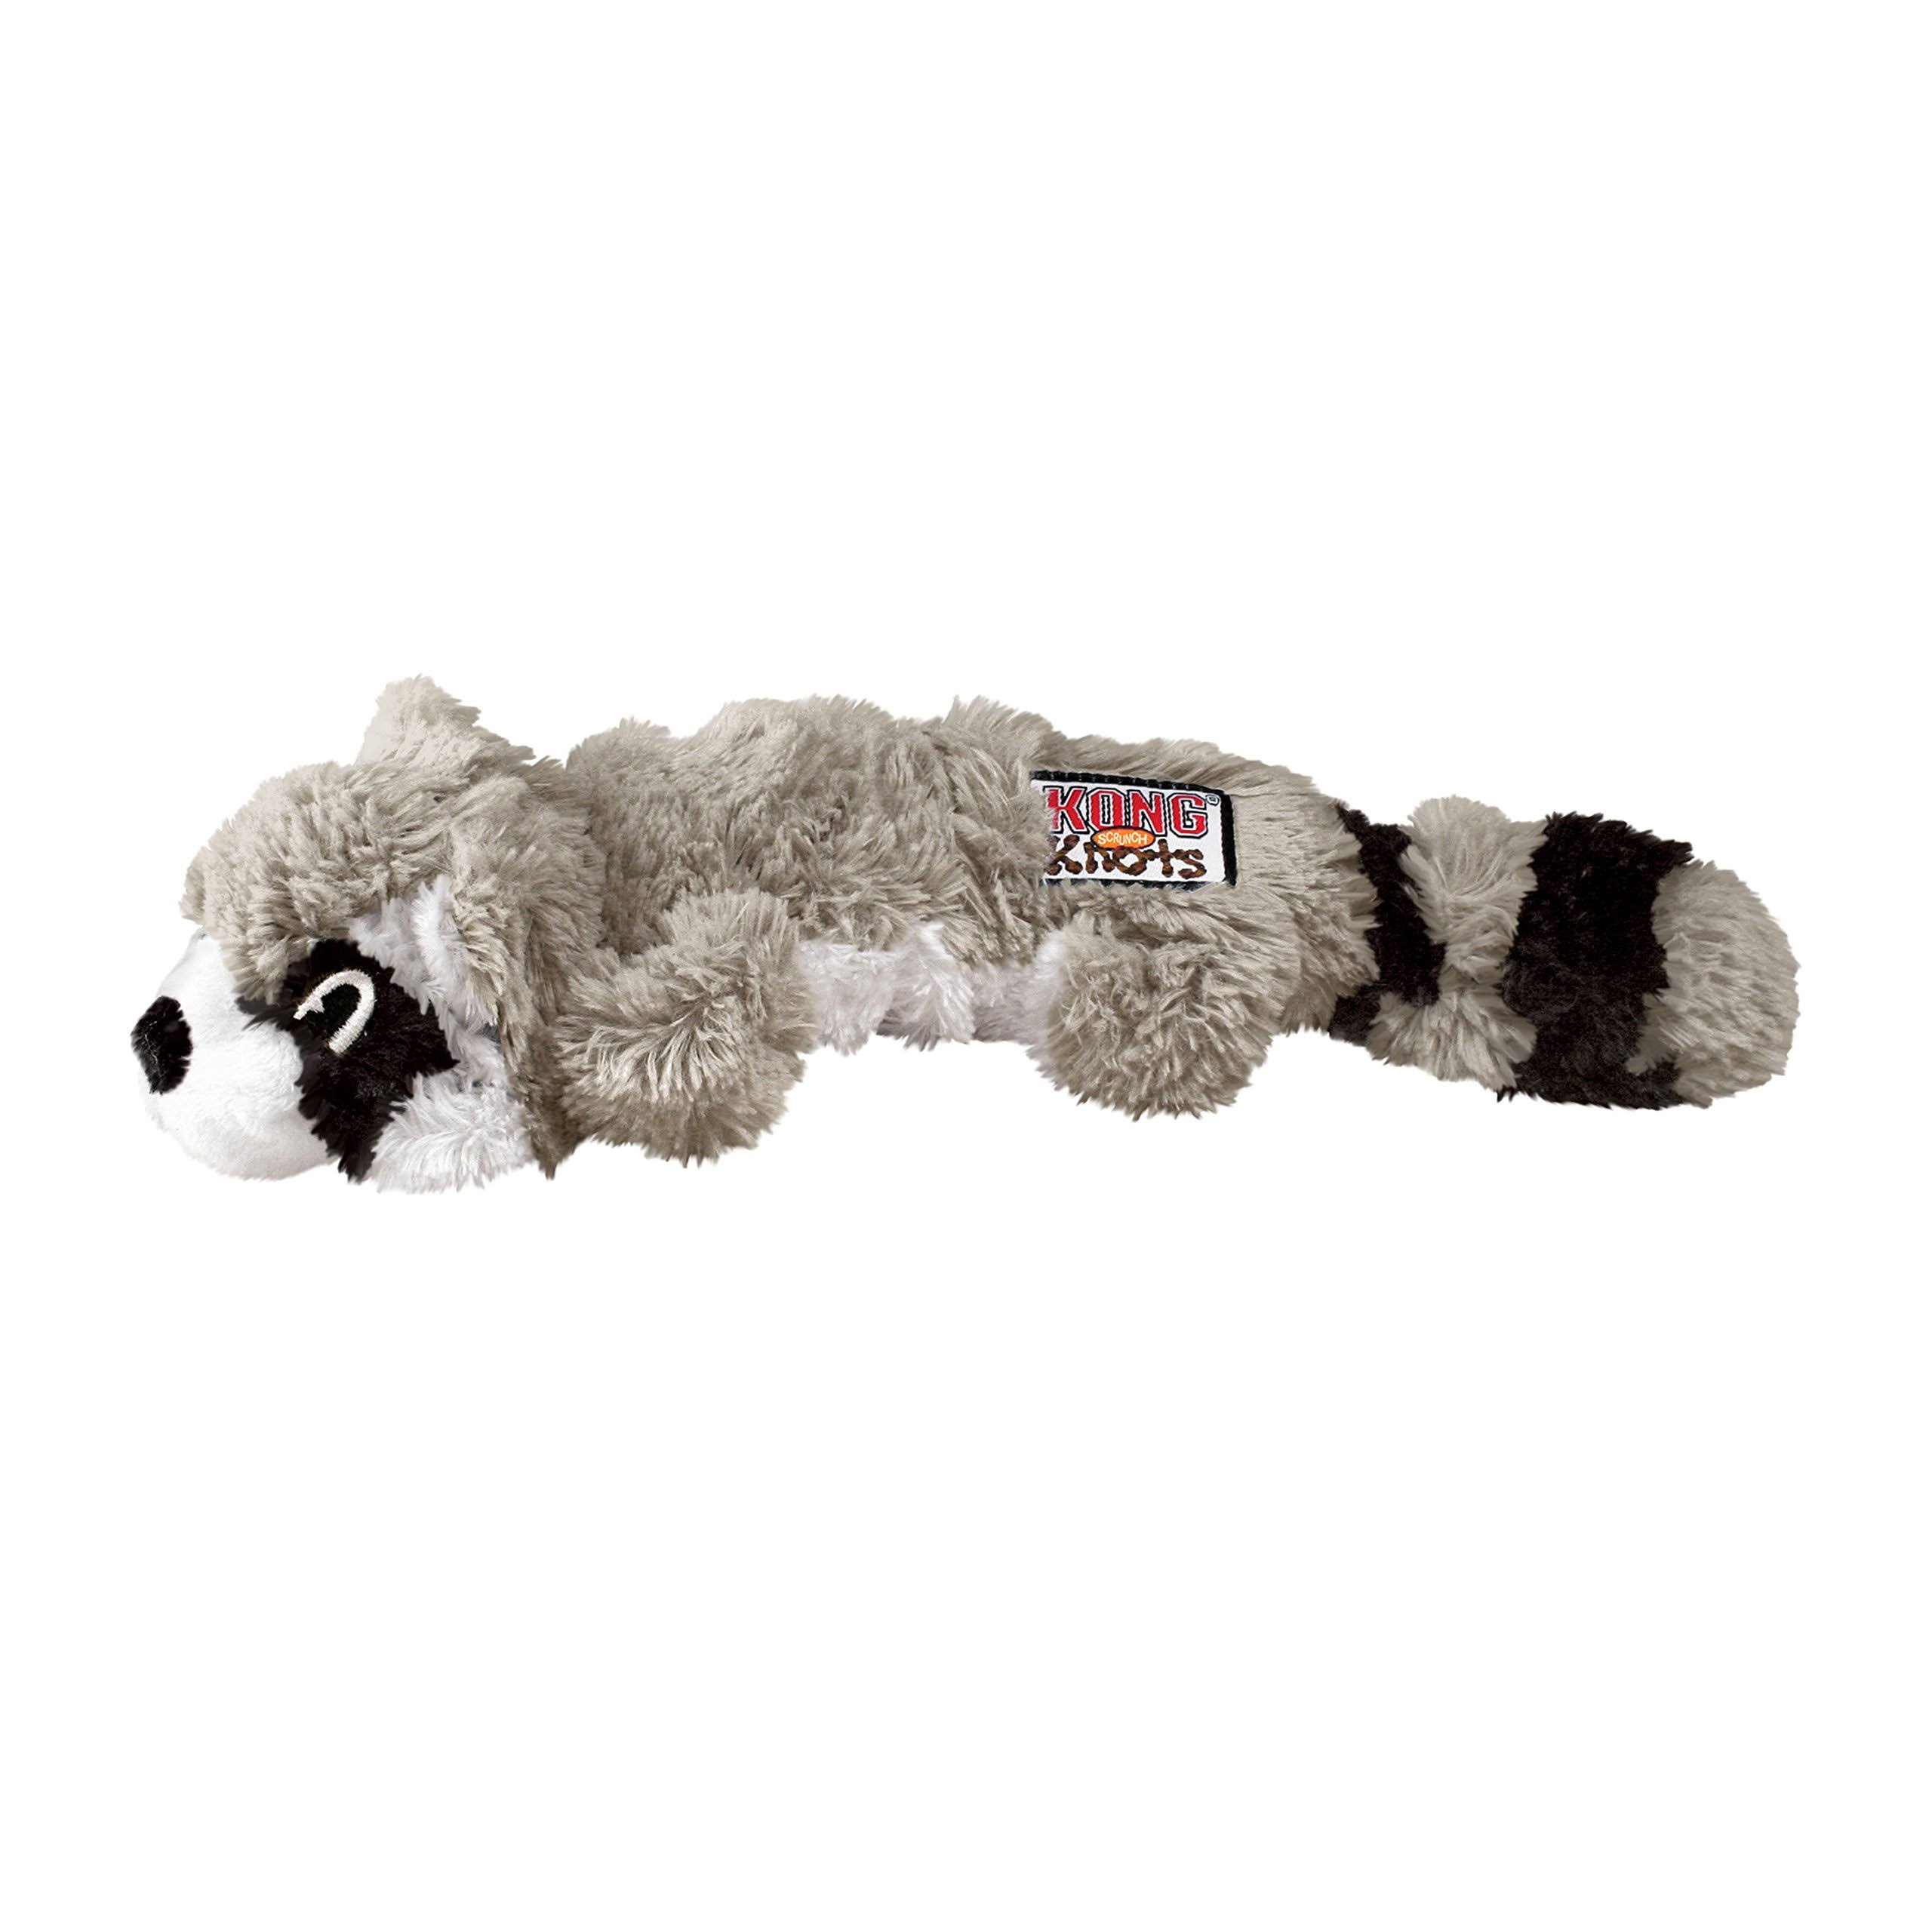 KONG Scrunch Knots Raccoon Dog Toy, Small-Medium